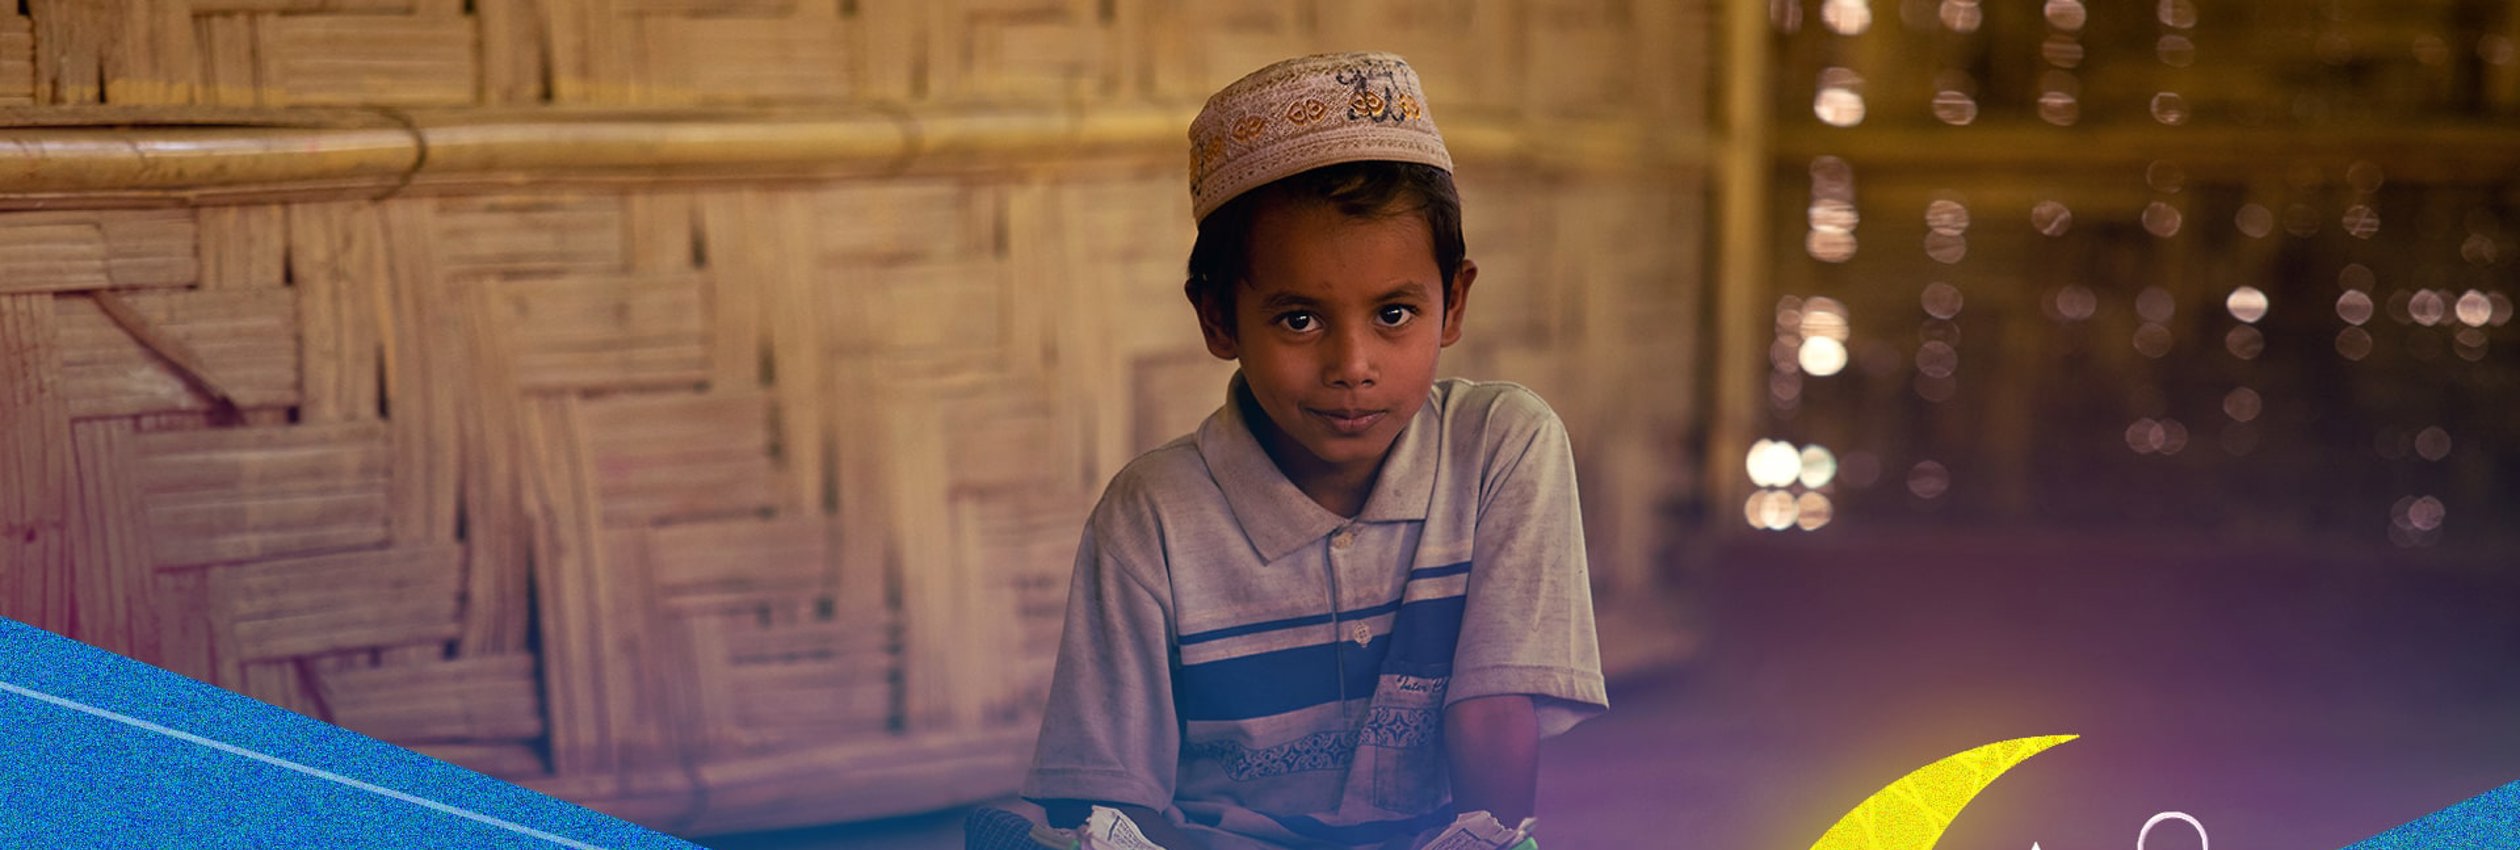 Rohingya refugee boy with a book